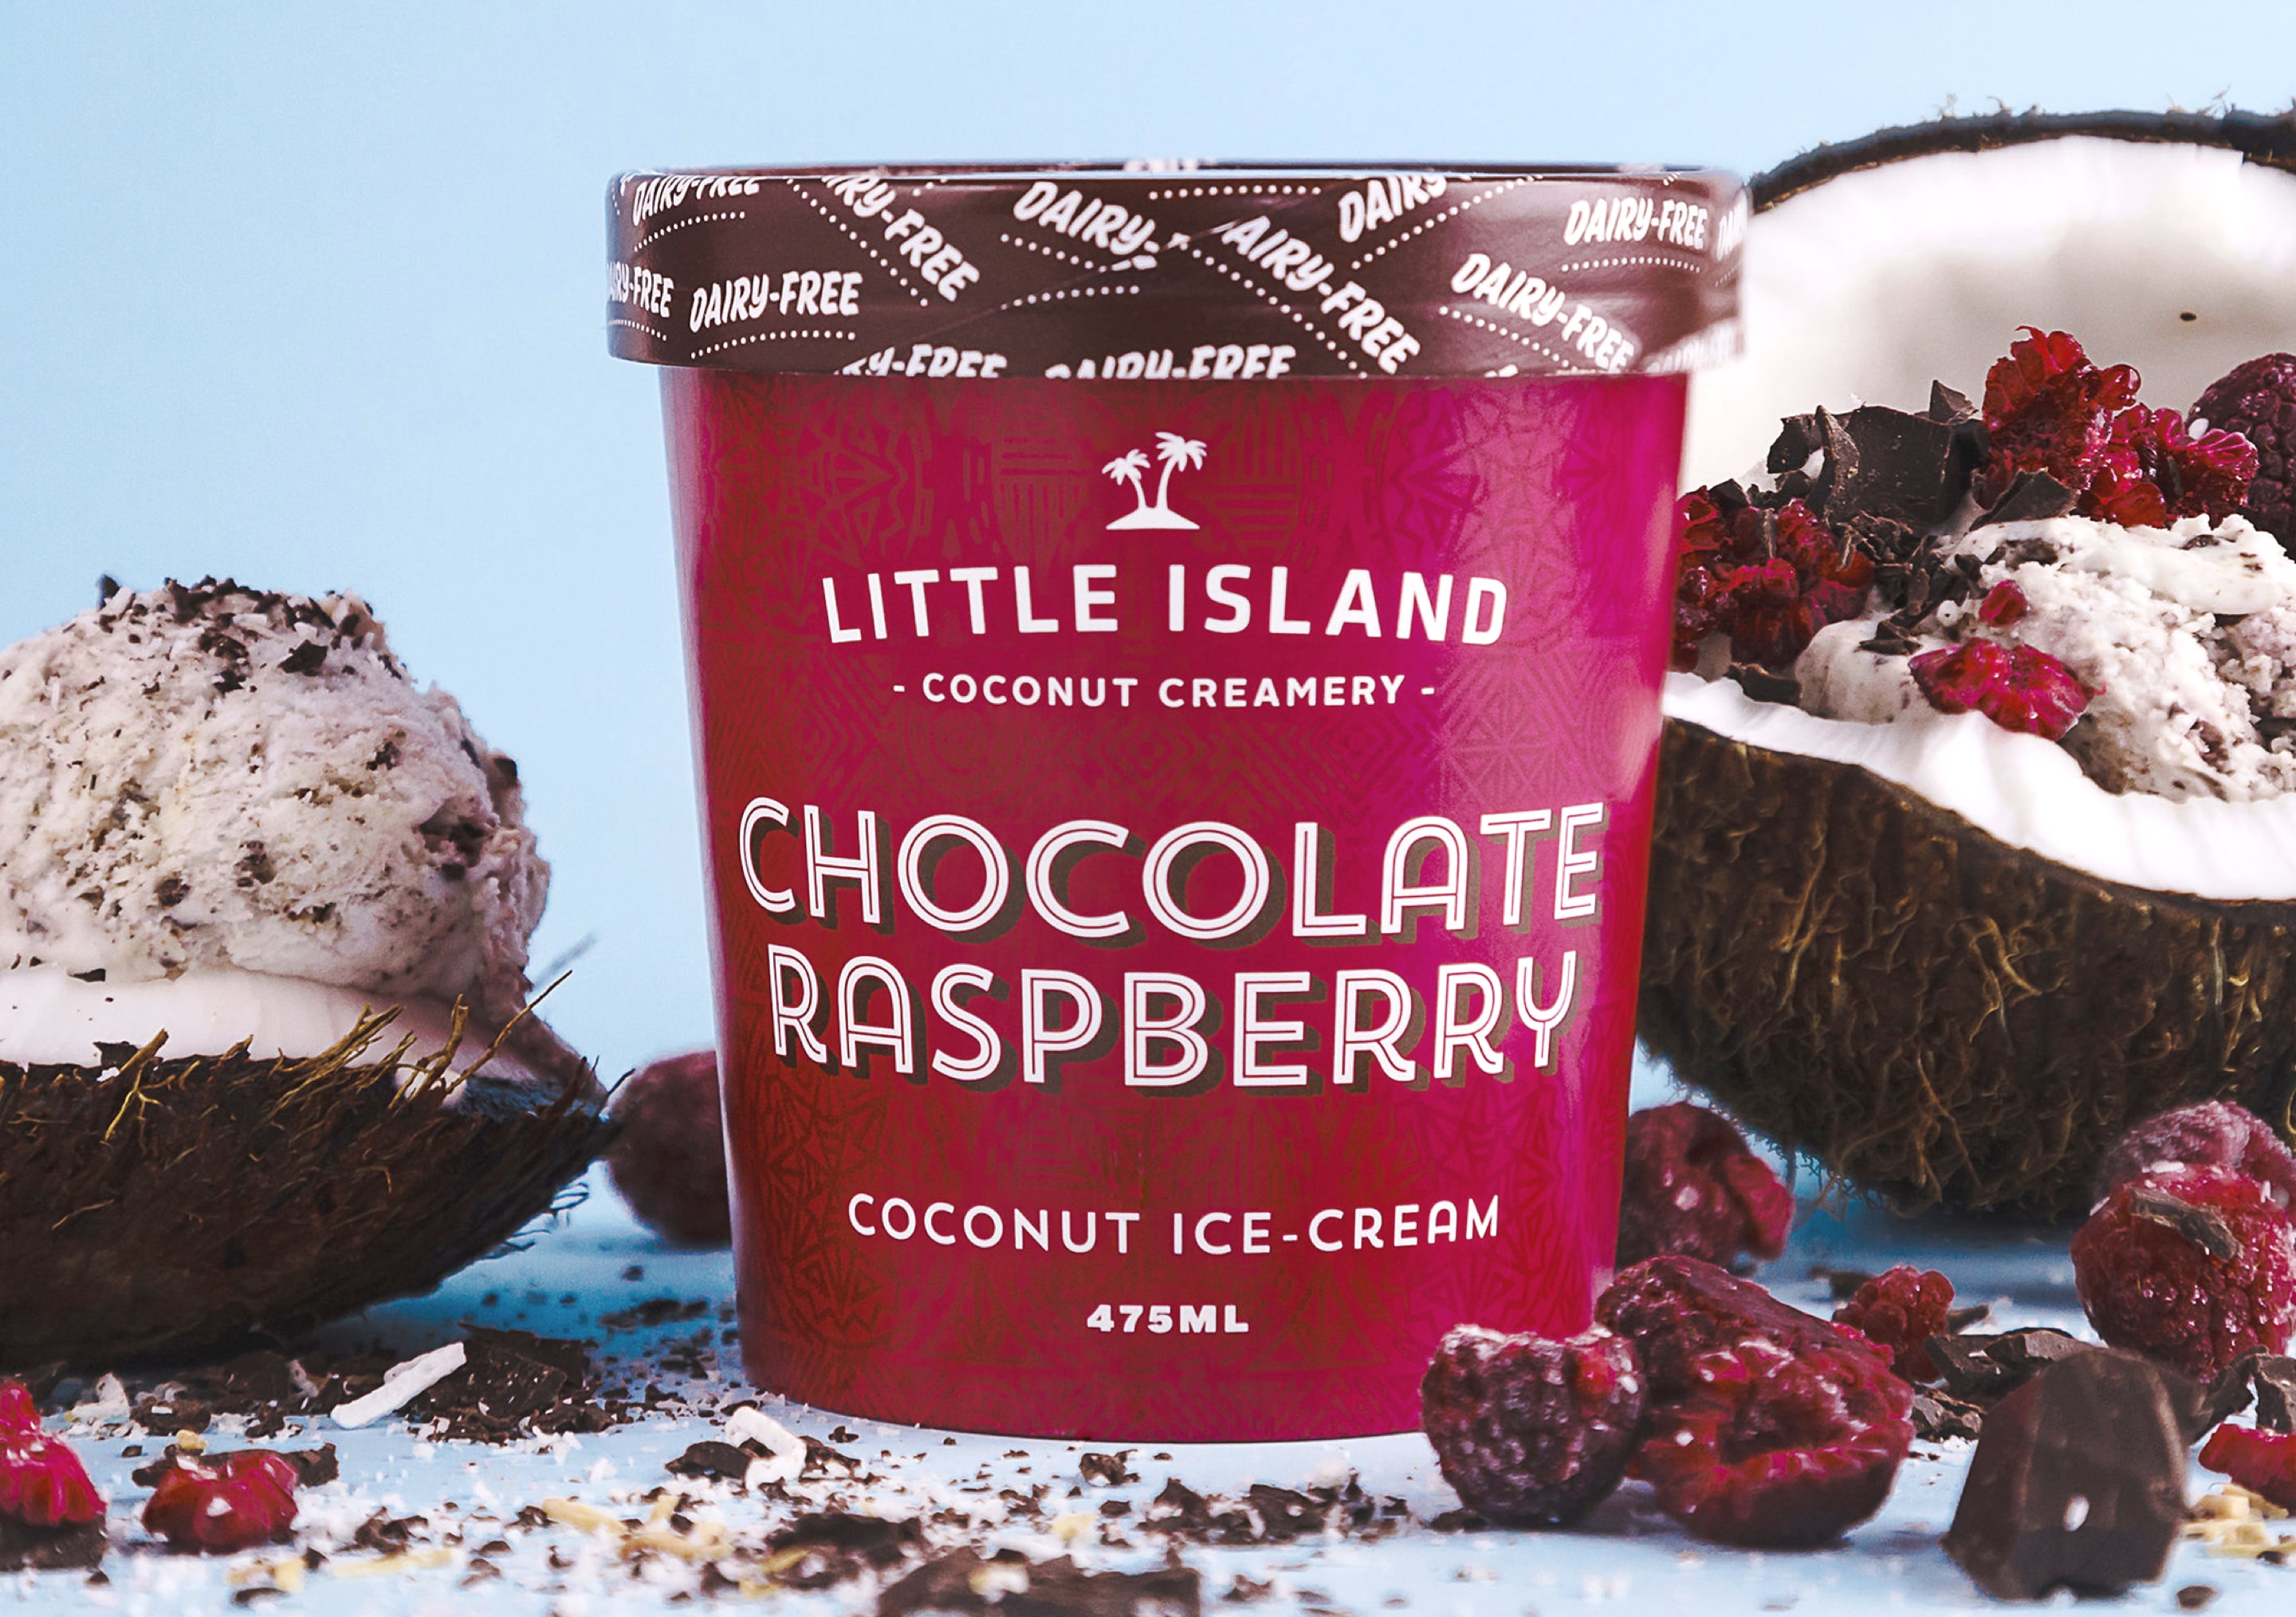 Little Island Chocolate Raspberry Ice cream